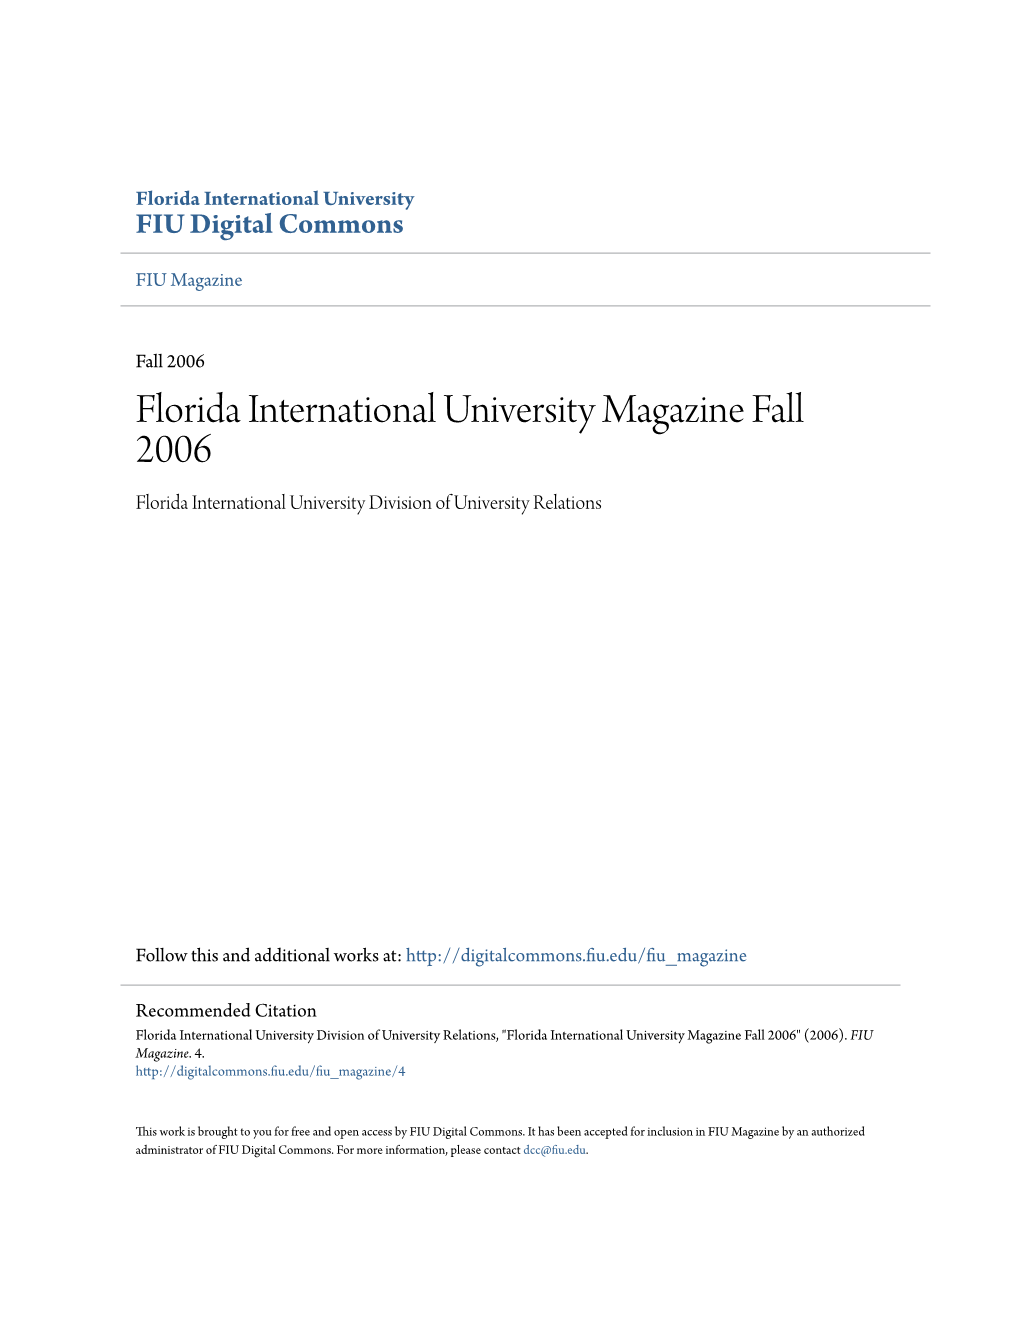 Florida International University Magazine Fall 2006 Florida International University Division of University Relations